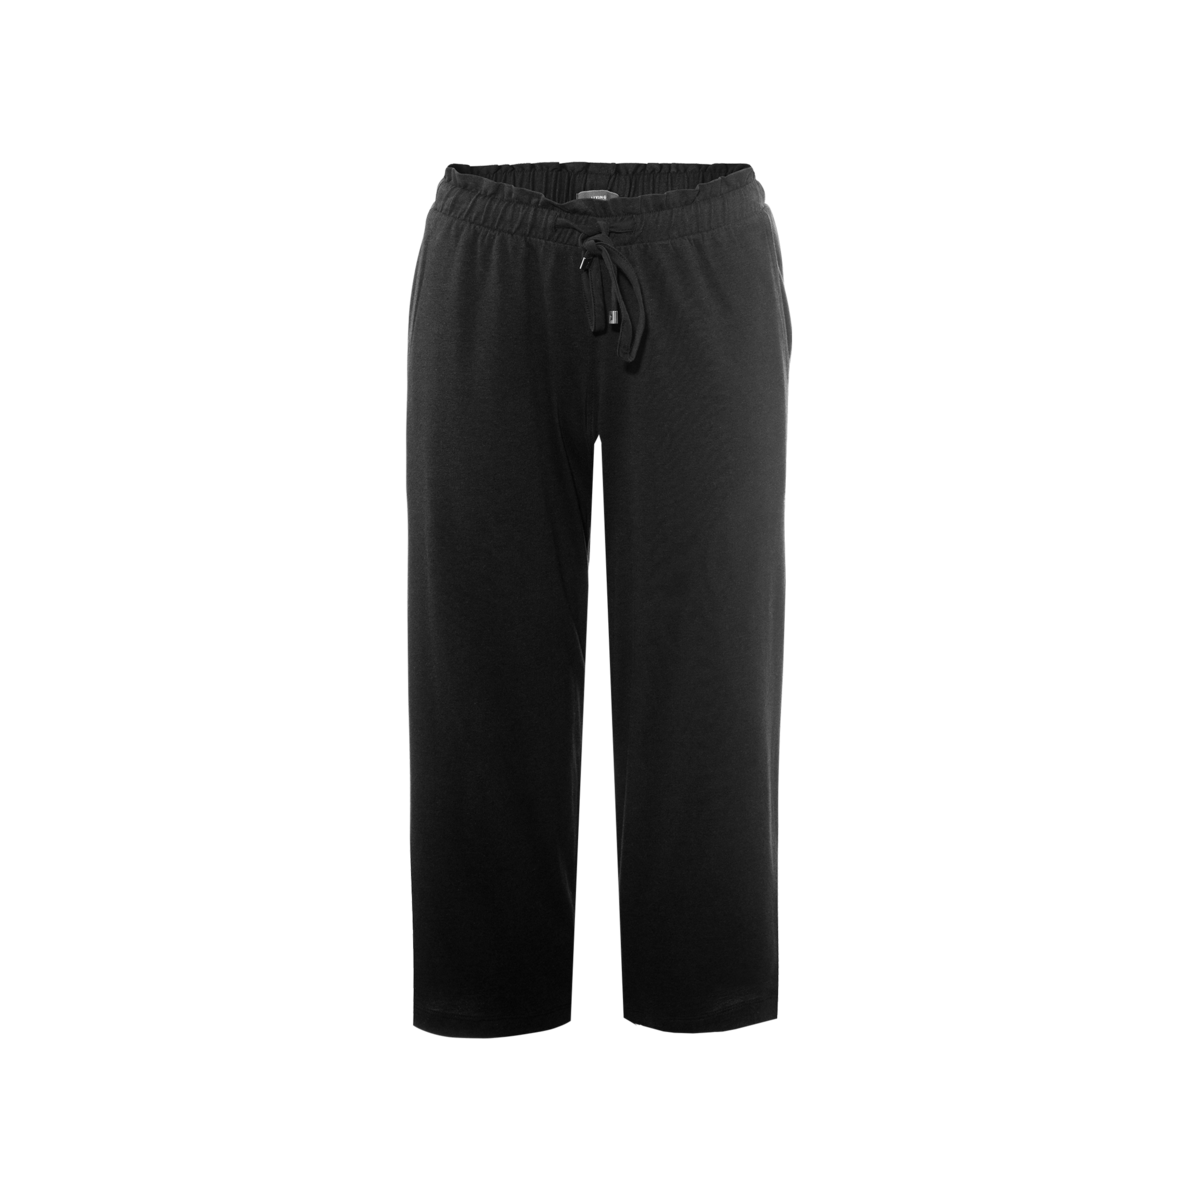 Black 7/8 trousers, INGA